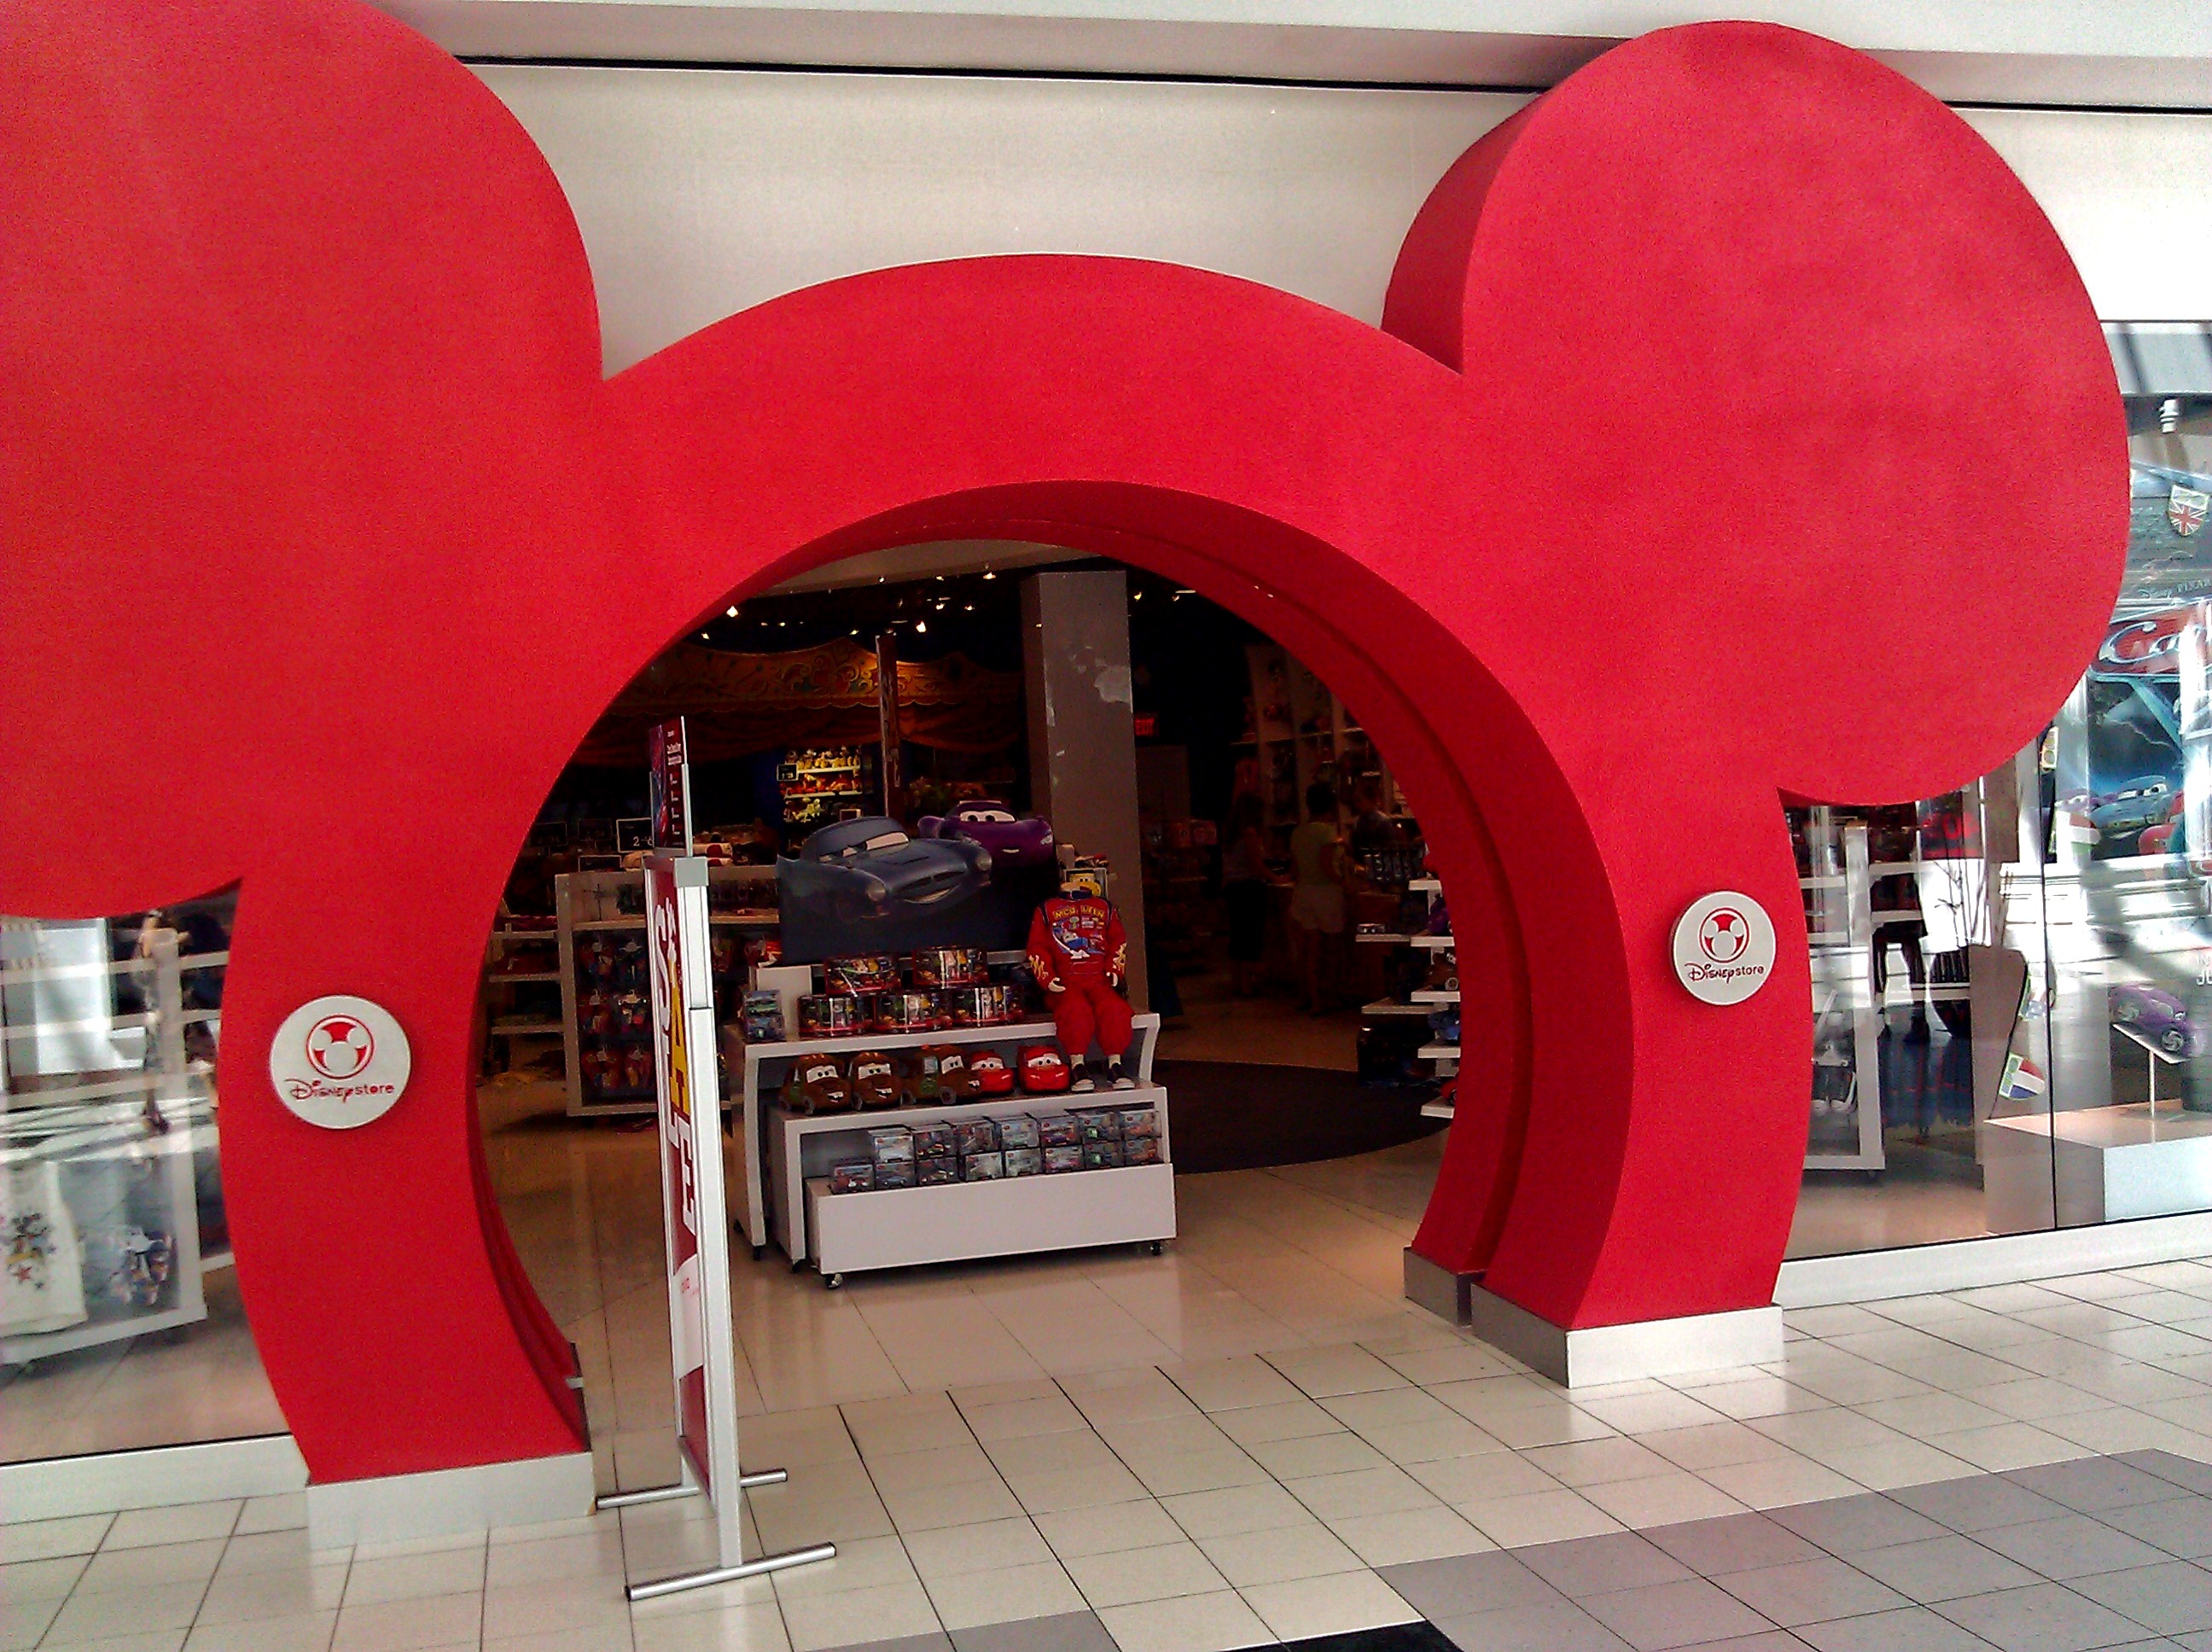 The Disney Store Northpoint Mall Alpharetta, GA Image